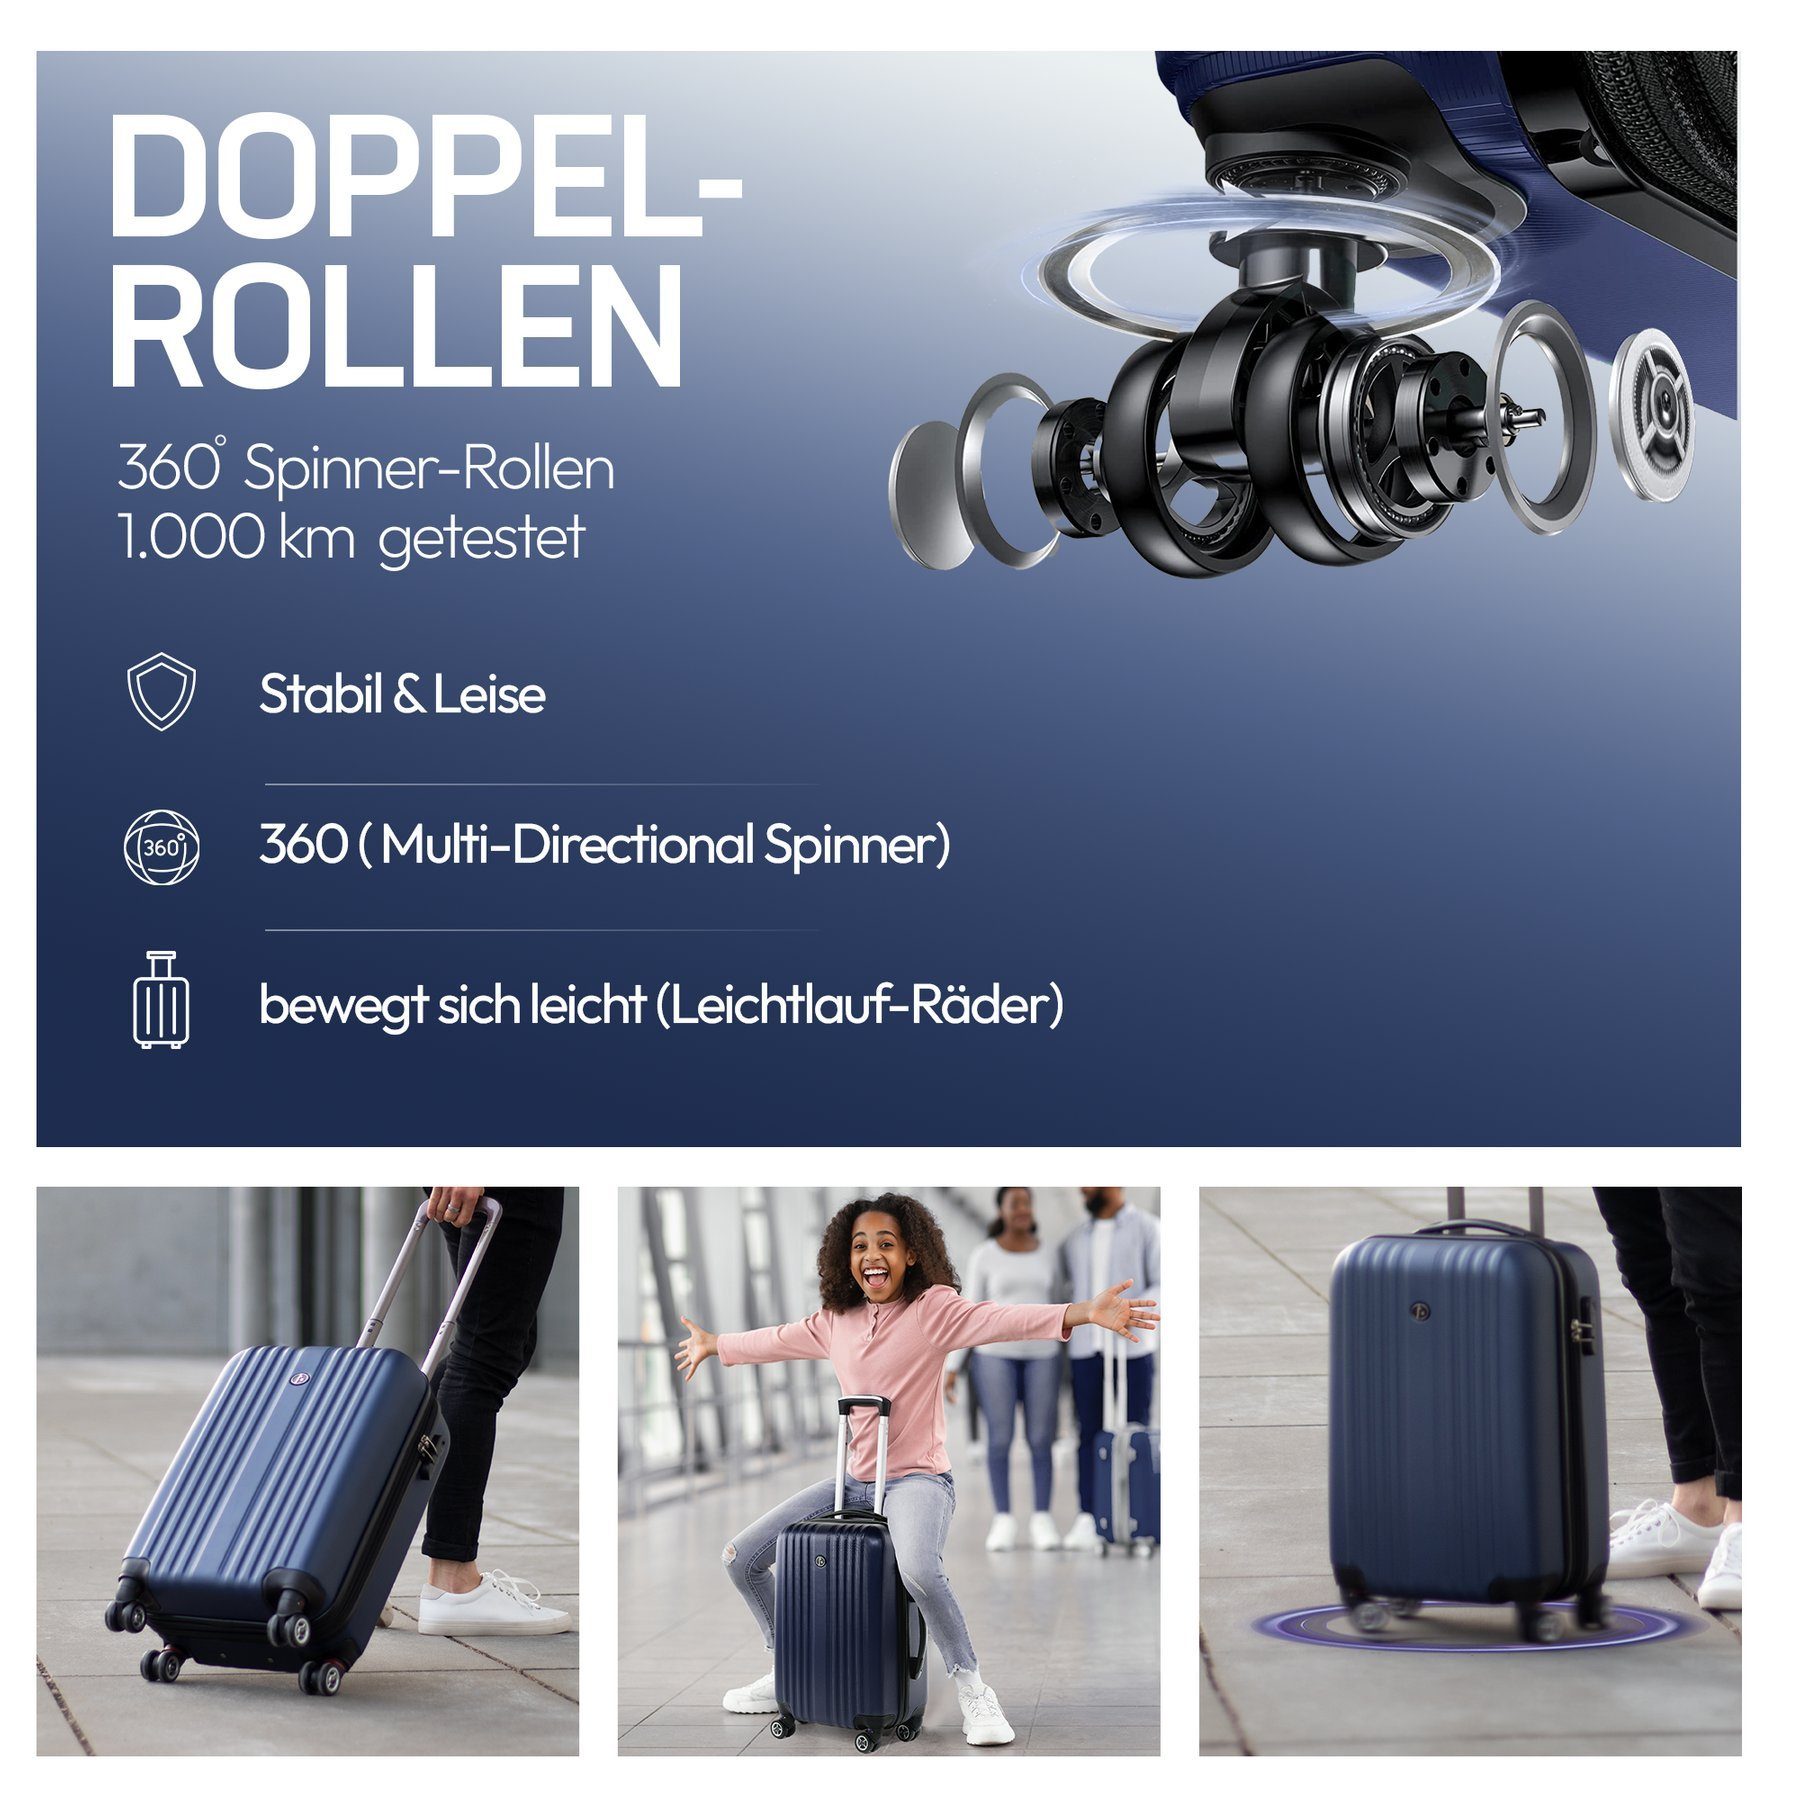 Kofferset Trolley 4 Rollen, teilig Reisekoffer erweiterbar dunkelblau Hartschale Toulouse, 3er Premium FERGÉ Koffer Set, 3 Rollkoffer